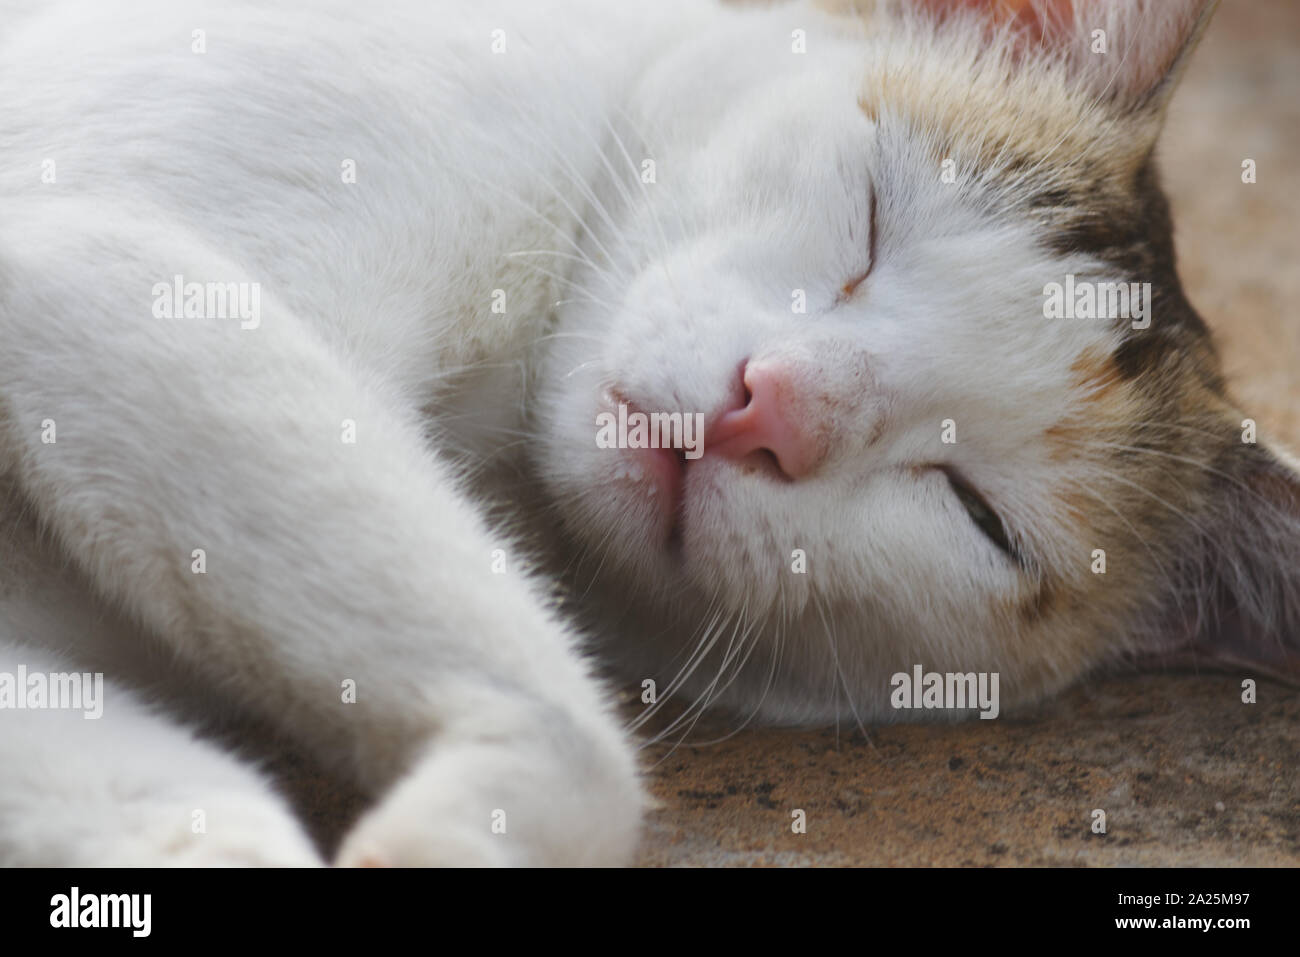 close up face of sleeping cat Stock Photo